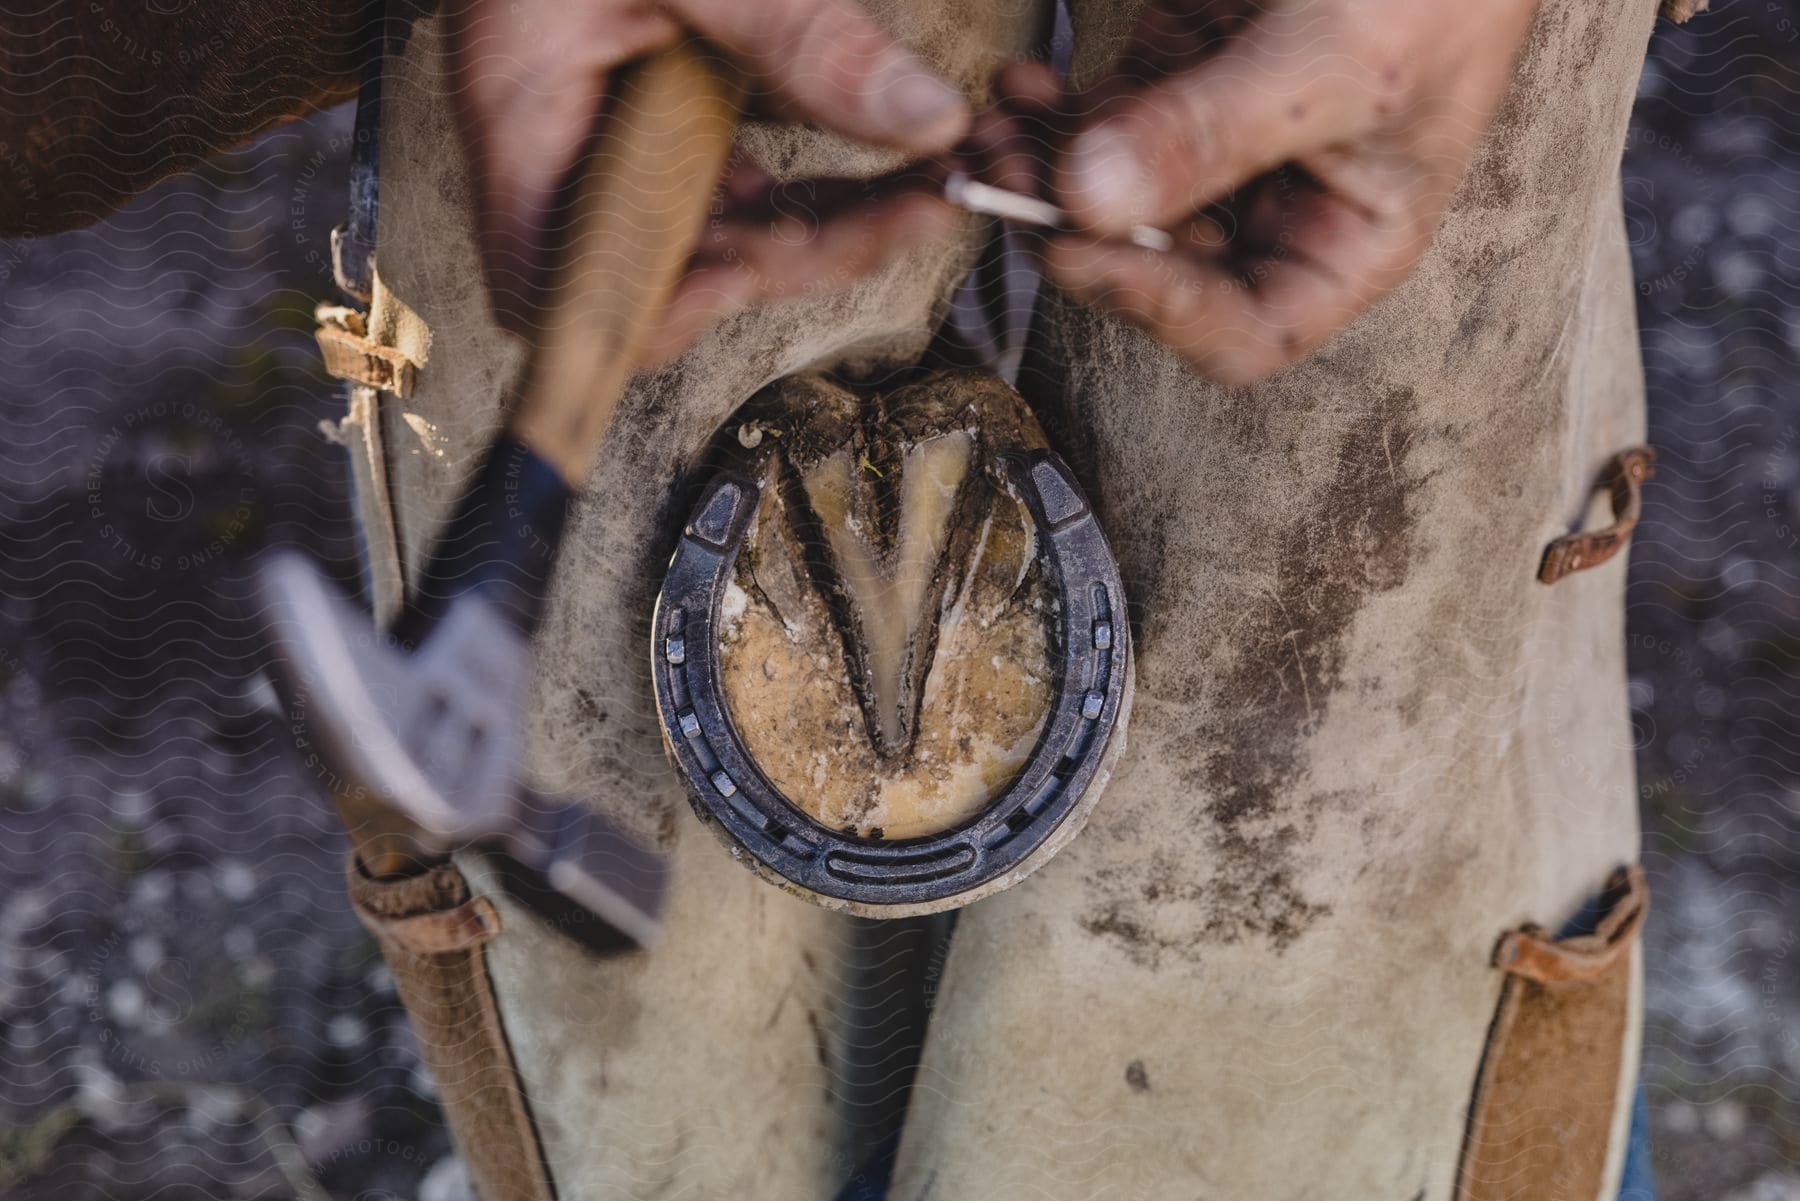 A man nailing a horseshoe to a horse's hoof.